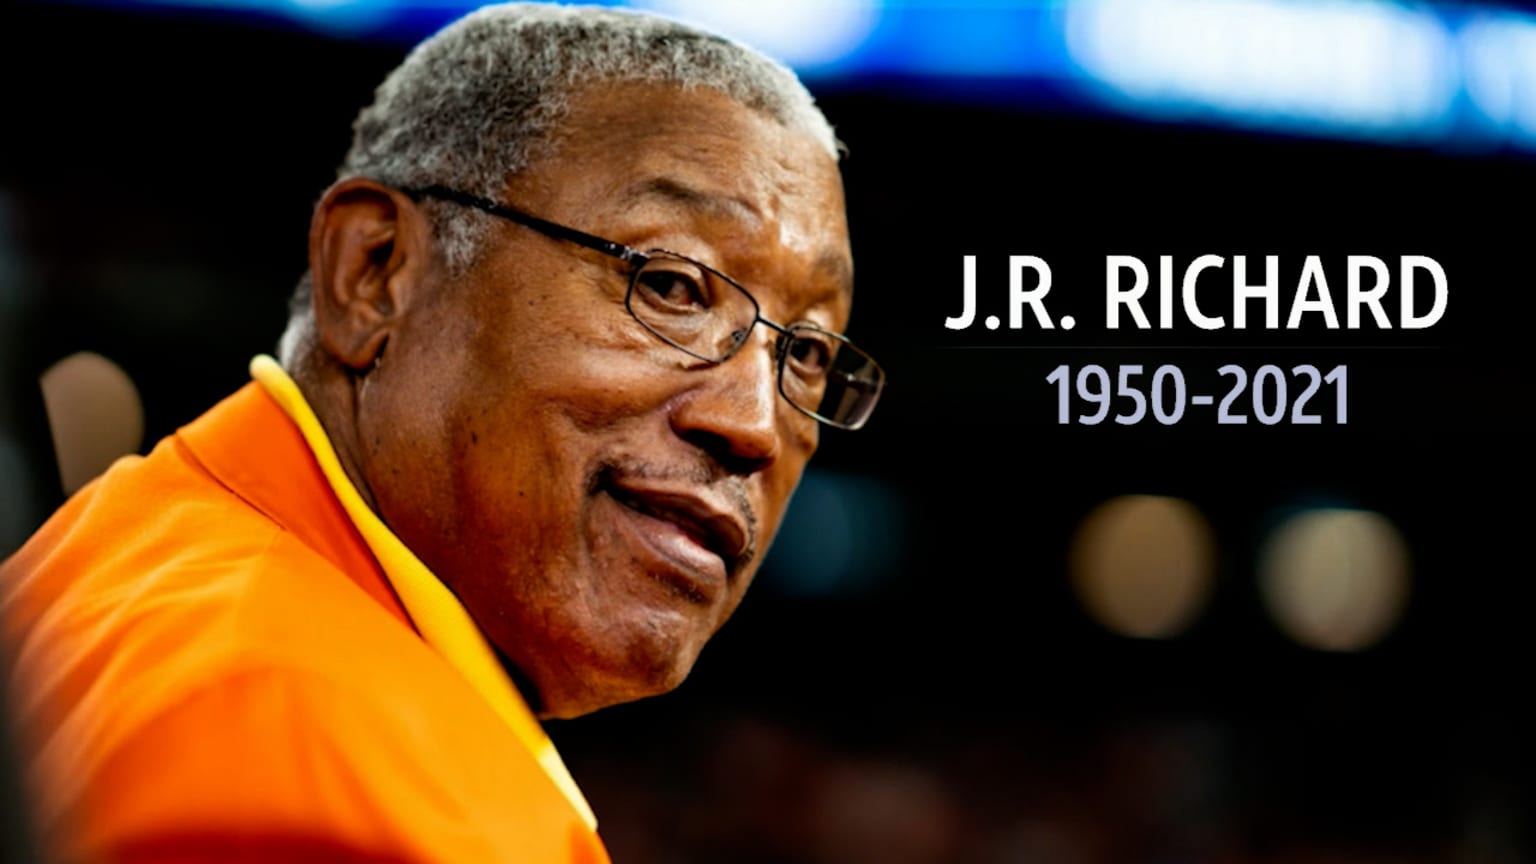 J.R. Richard Tribute